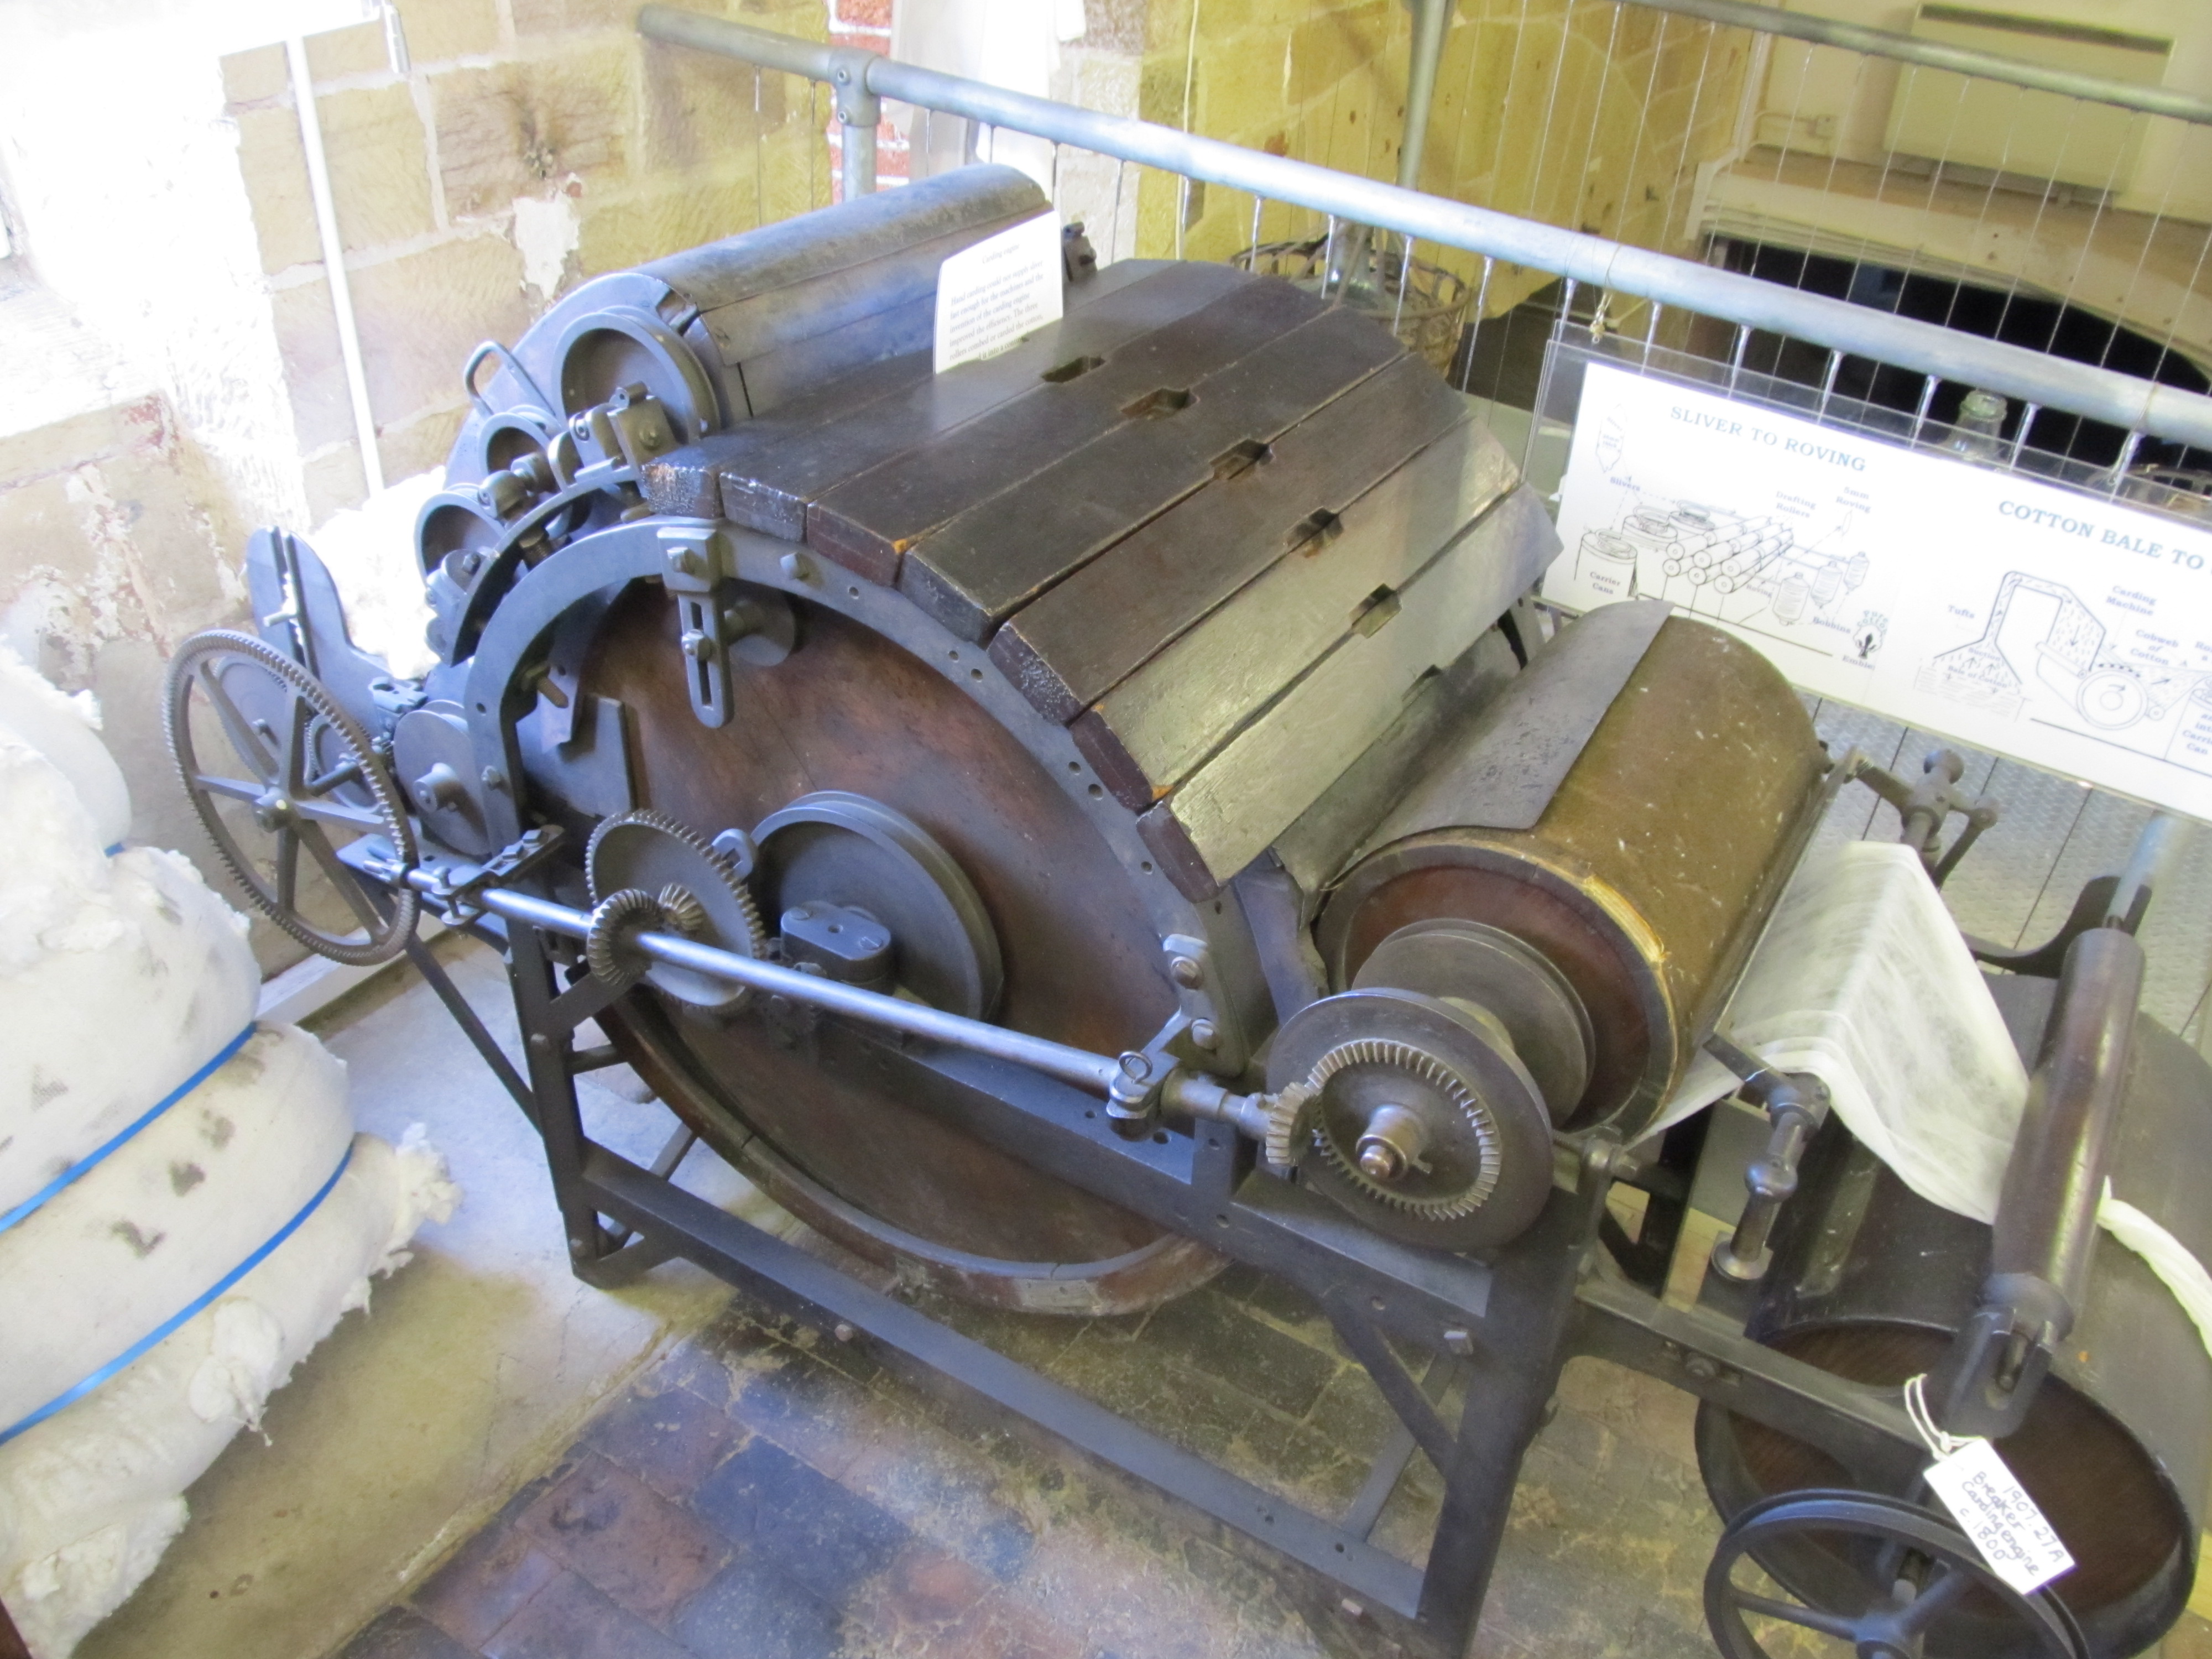 Carding Machine at Strutt's North Mill